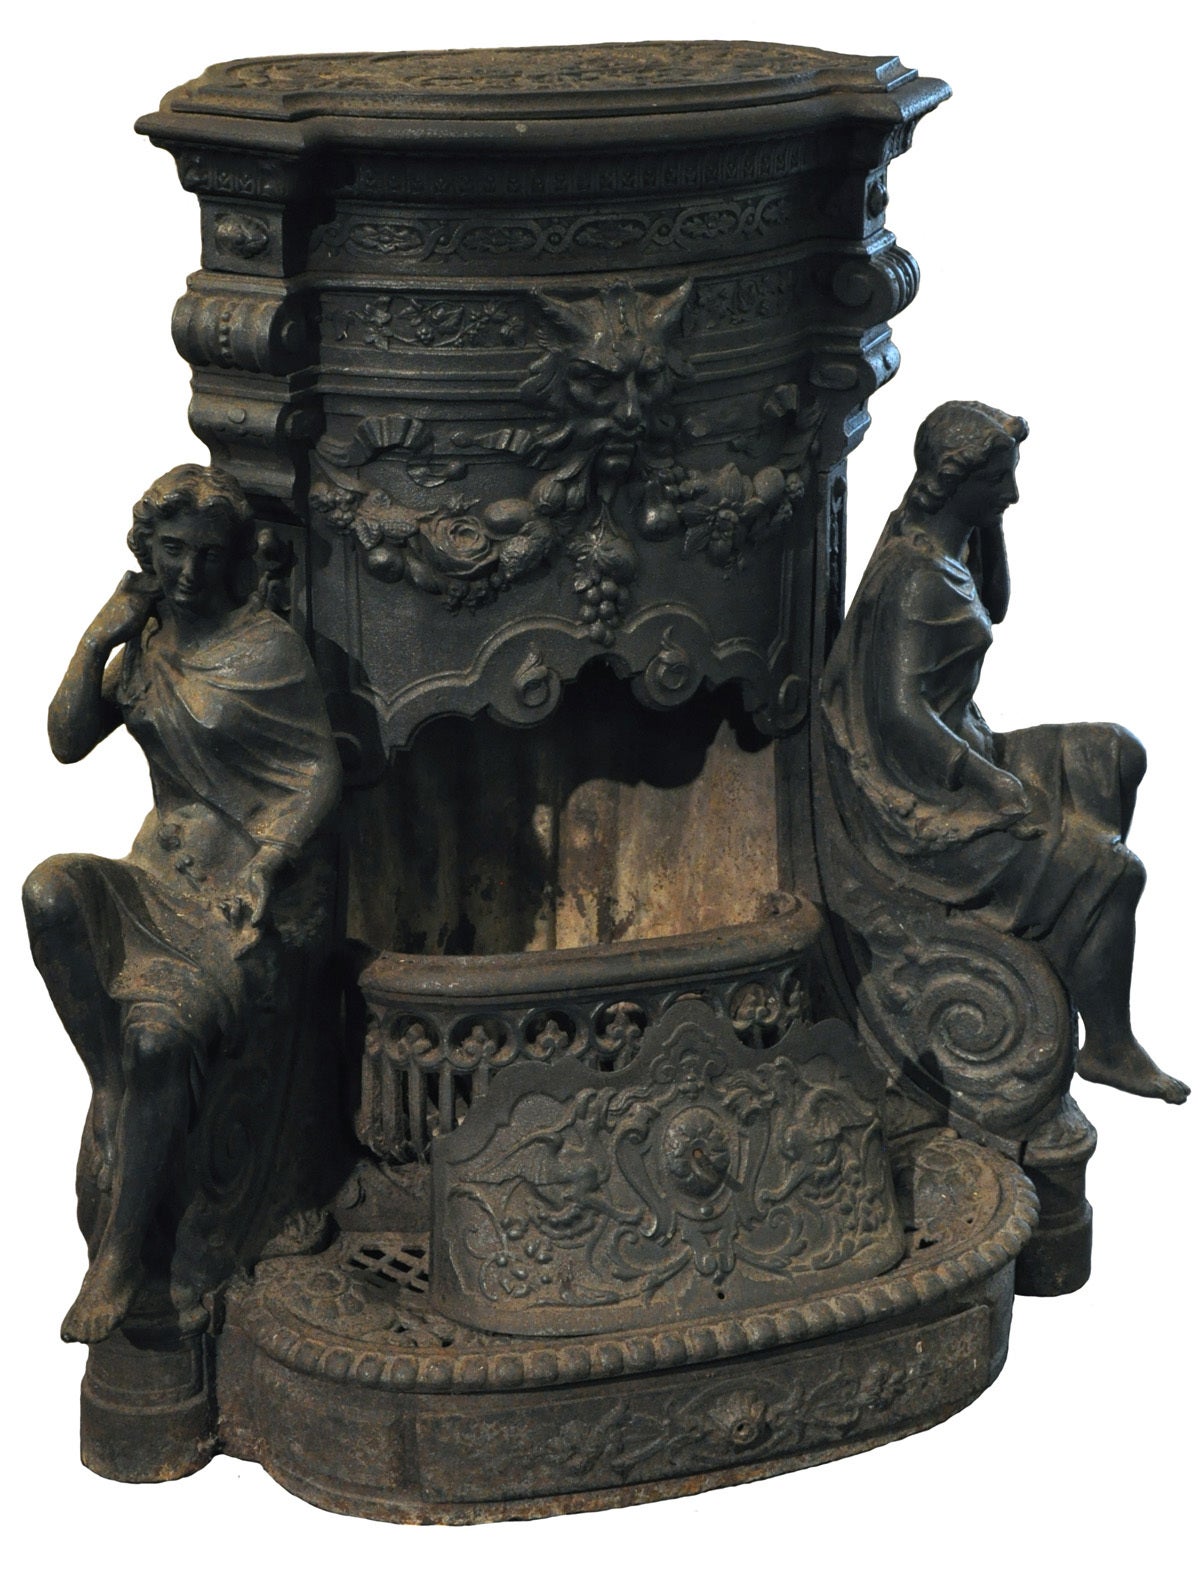 Ornate 19th Century Cast Iron Wood Stove